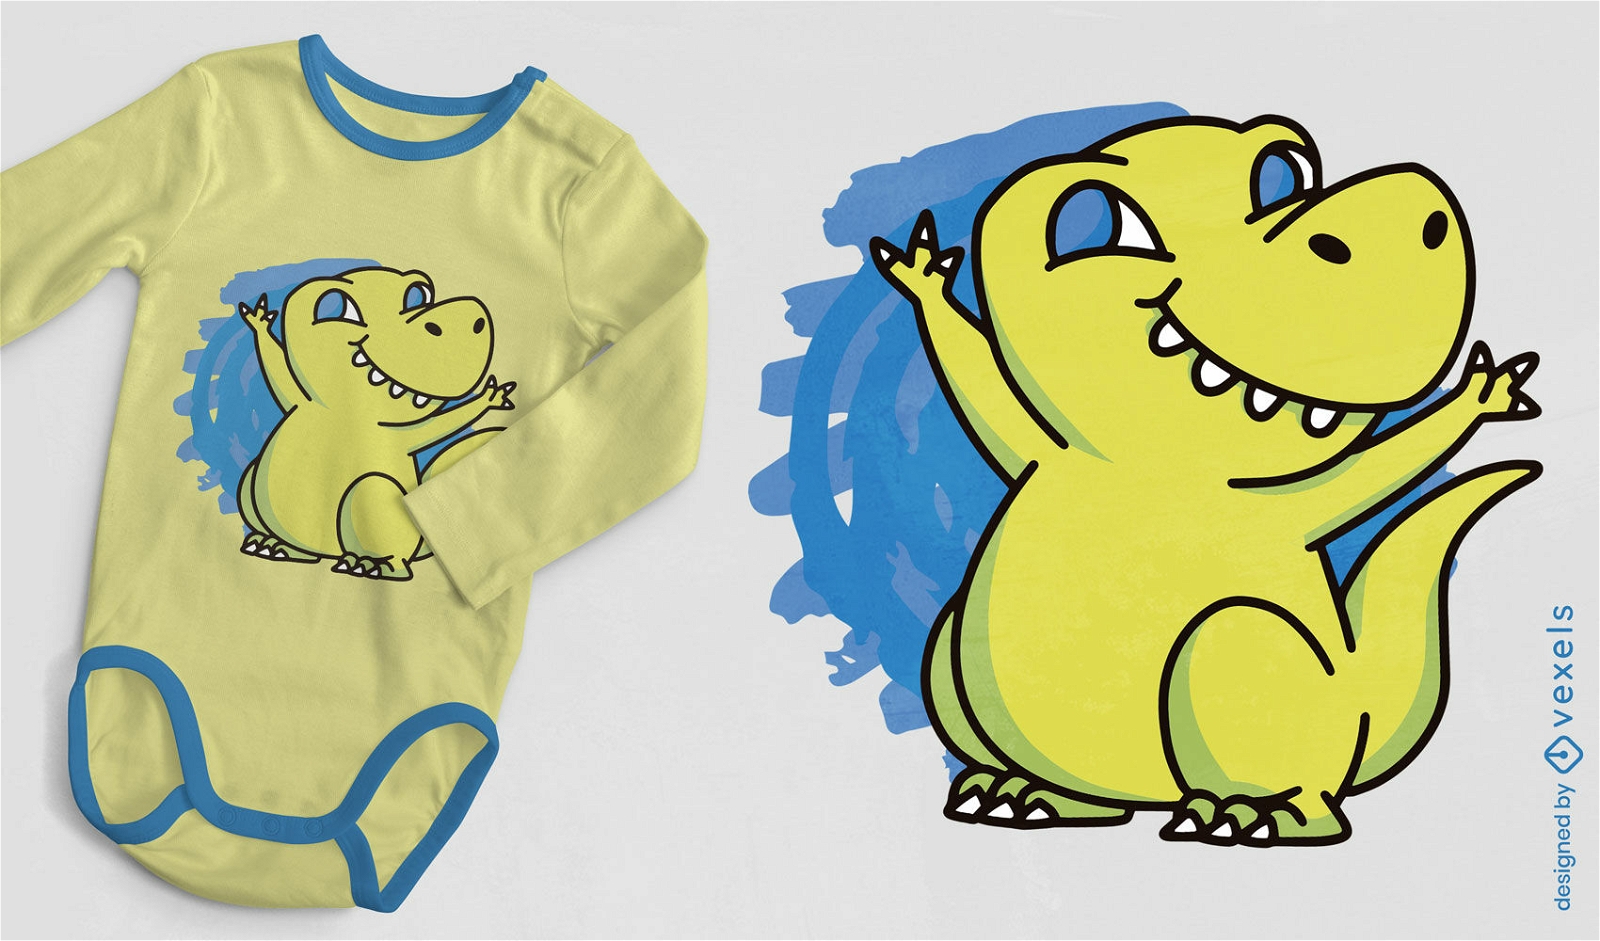 Baby dinosaur cartoon t-shirt design